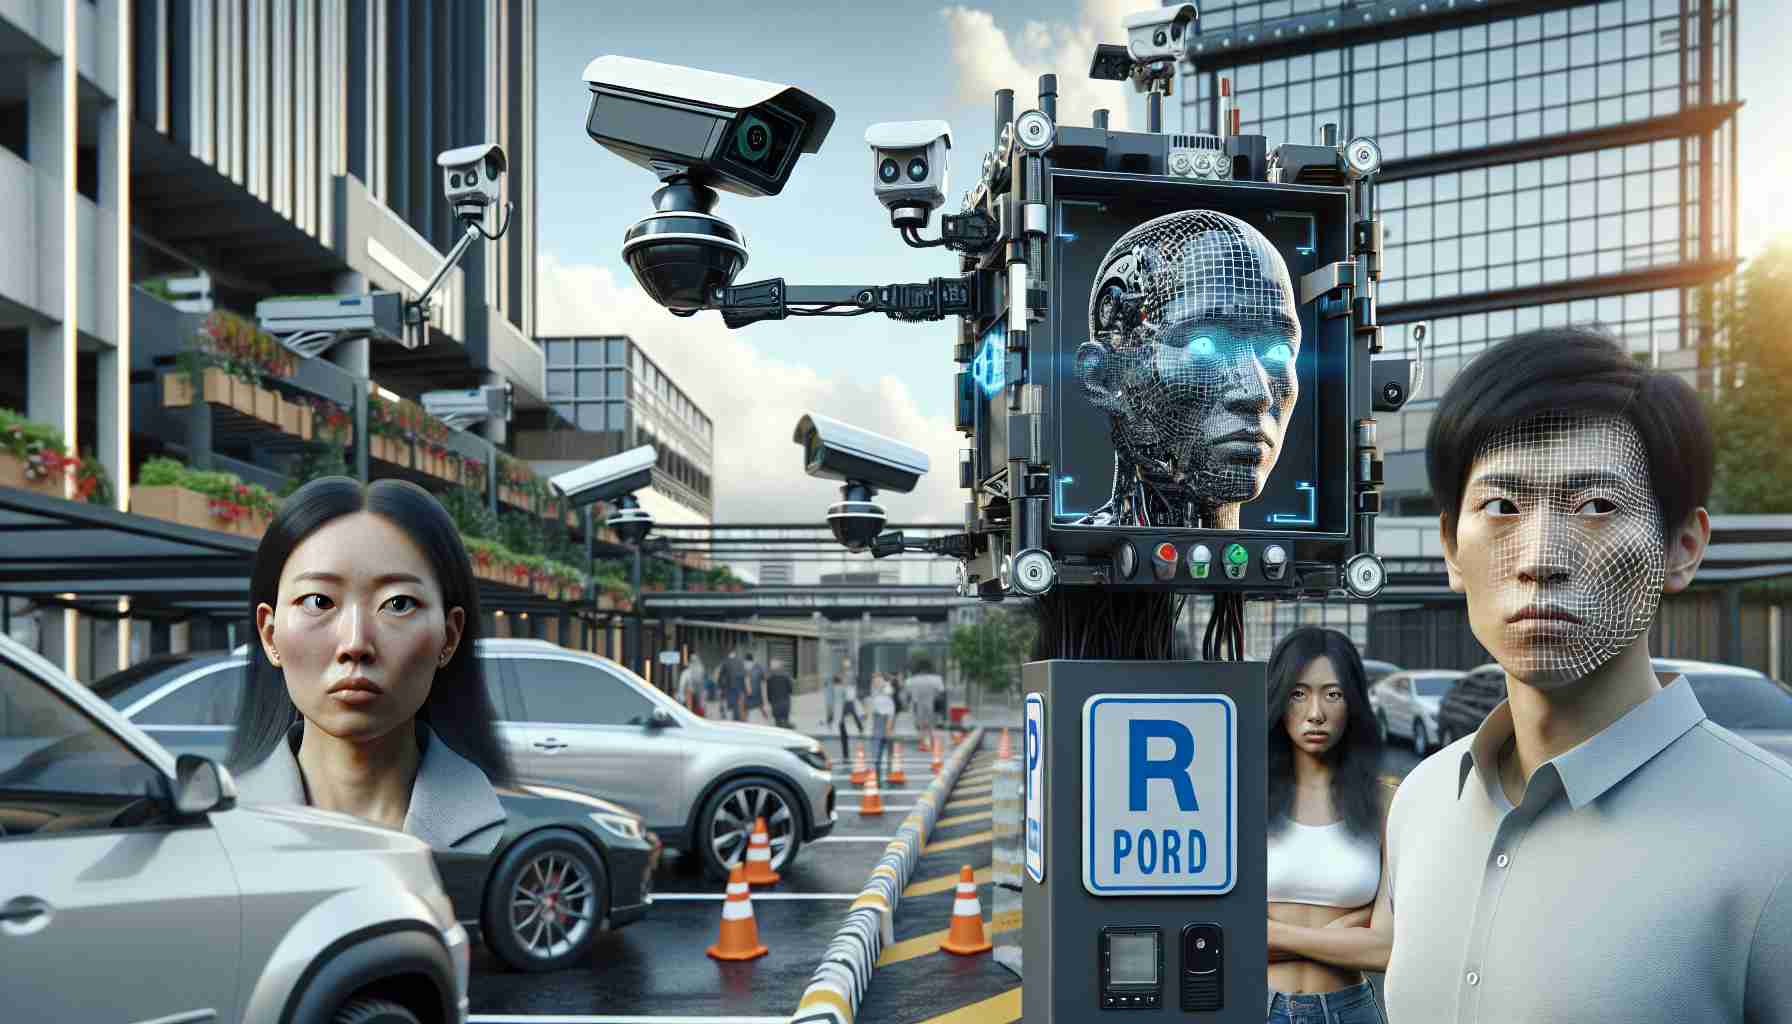 AI Enforces Parking Regulations, Sparking Consumer Dissatisfaction